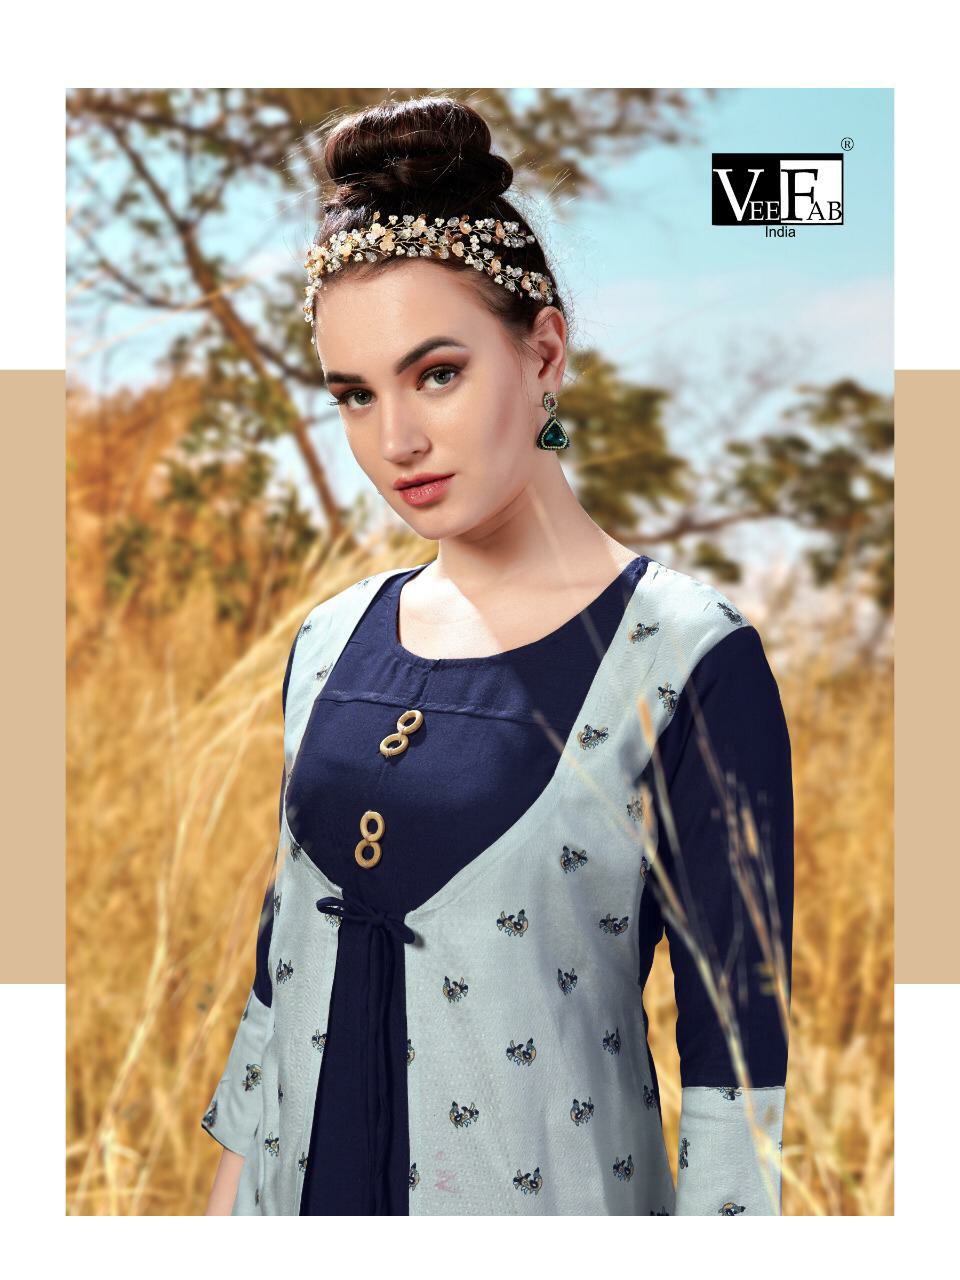 Vee Fab hotstar vol 2 gorgeous stunning look beautifully designed modern Trendy fits Kurties